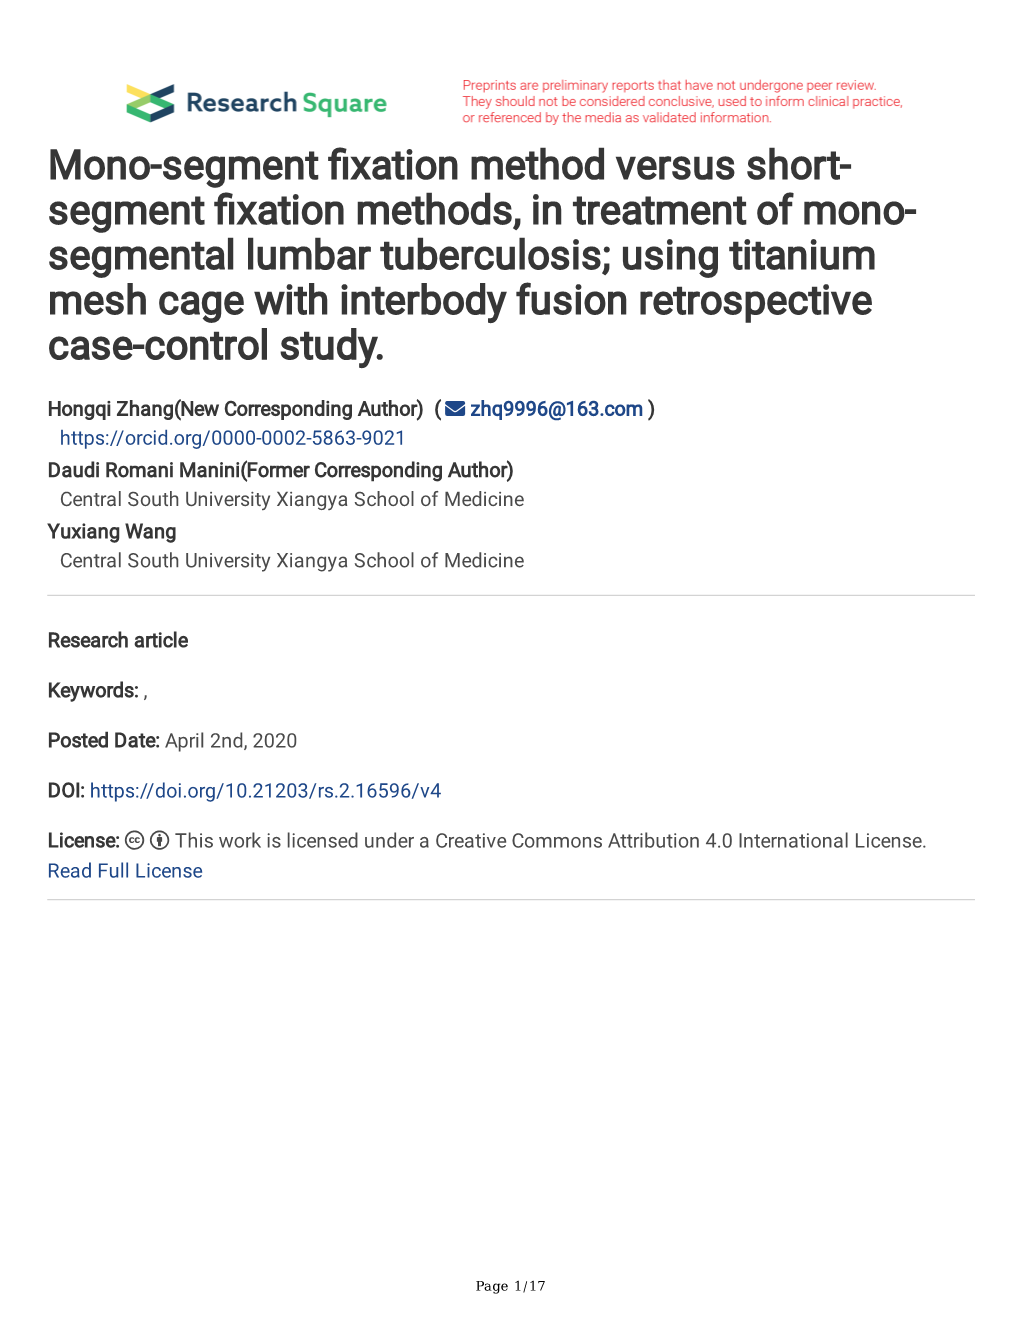 Using Titanium Mesh Cage with Interbody Fusion Retrospective Case-Control Study